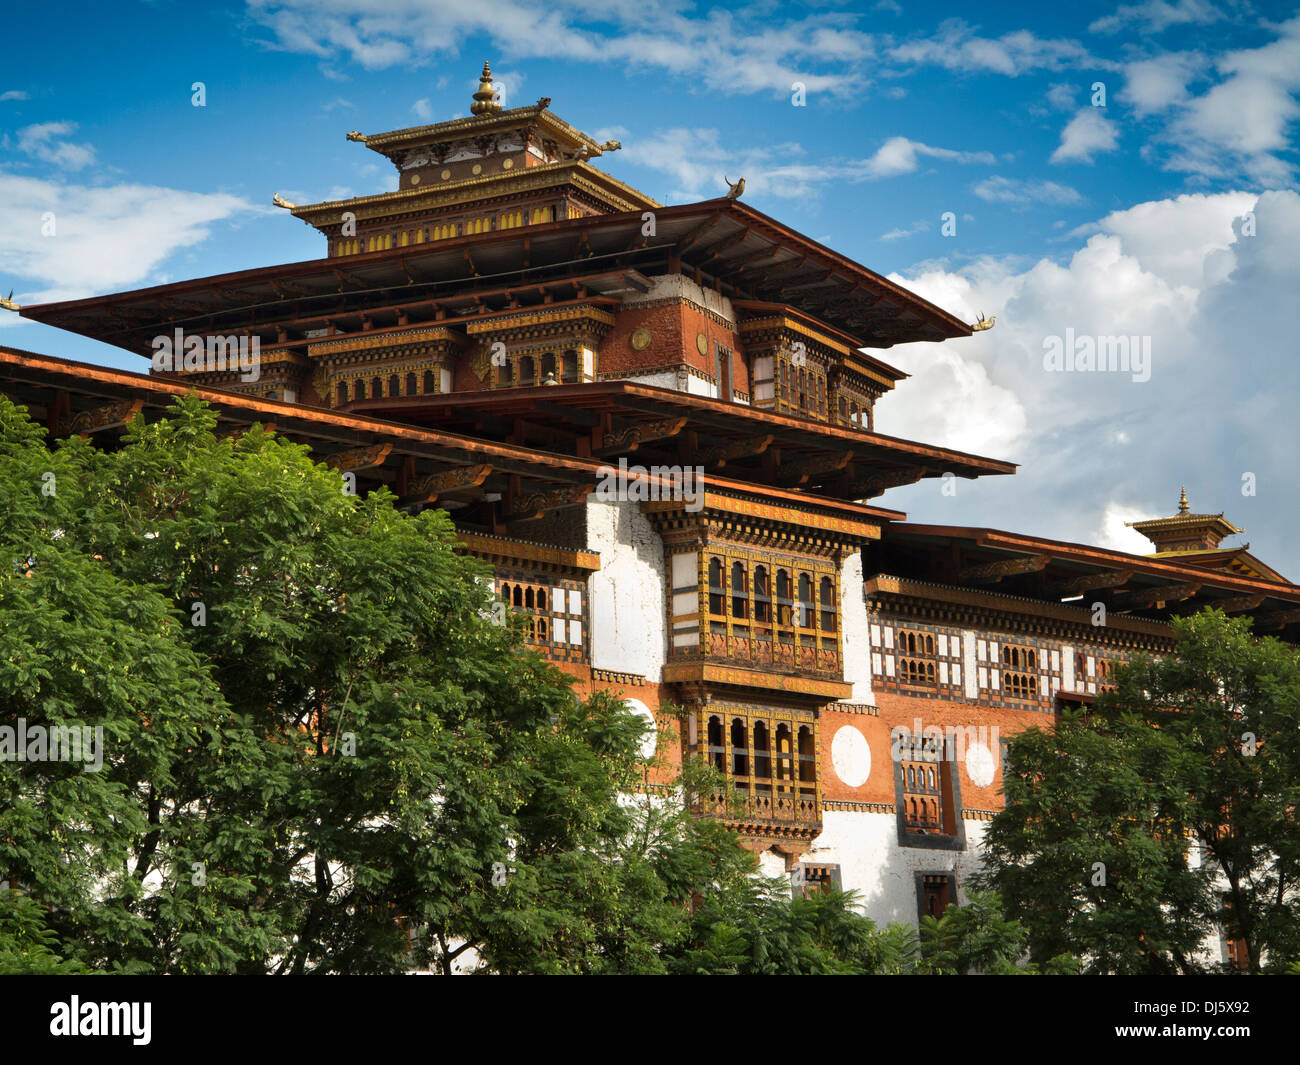 Bhutan, Punakha Dzong, Monastery prayer hall tower, decorated wooden structure Stock Photo